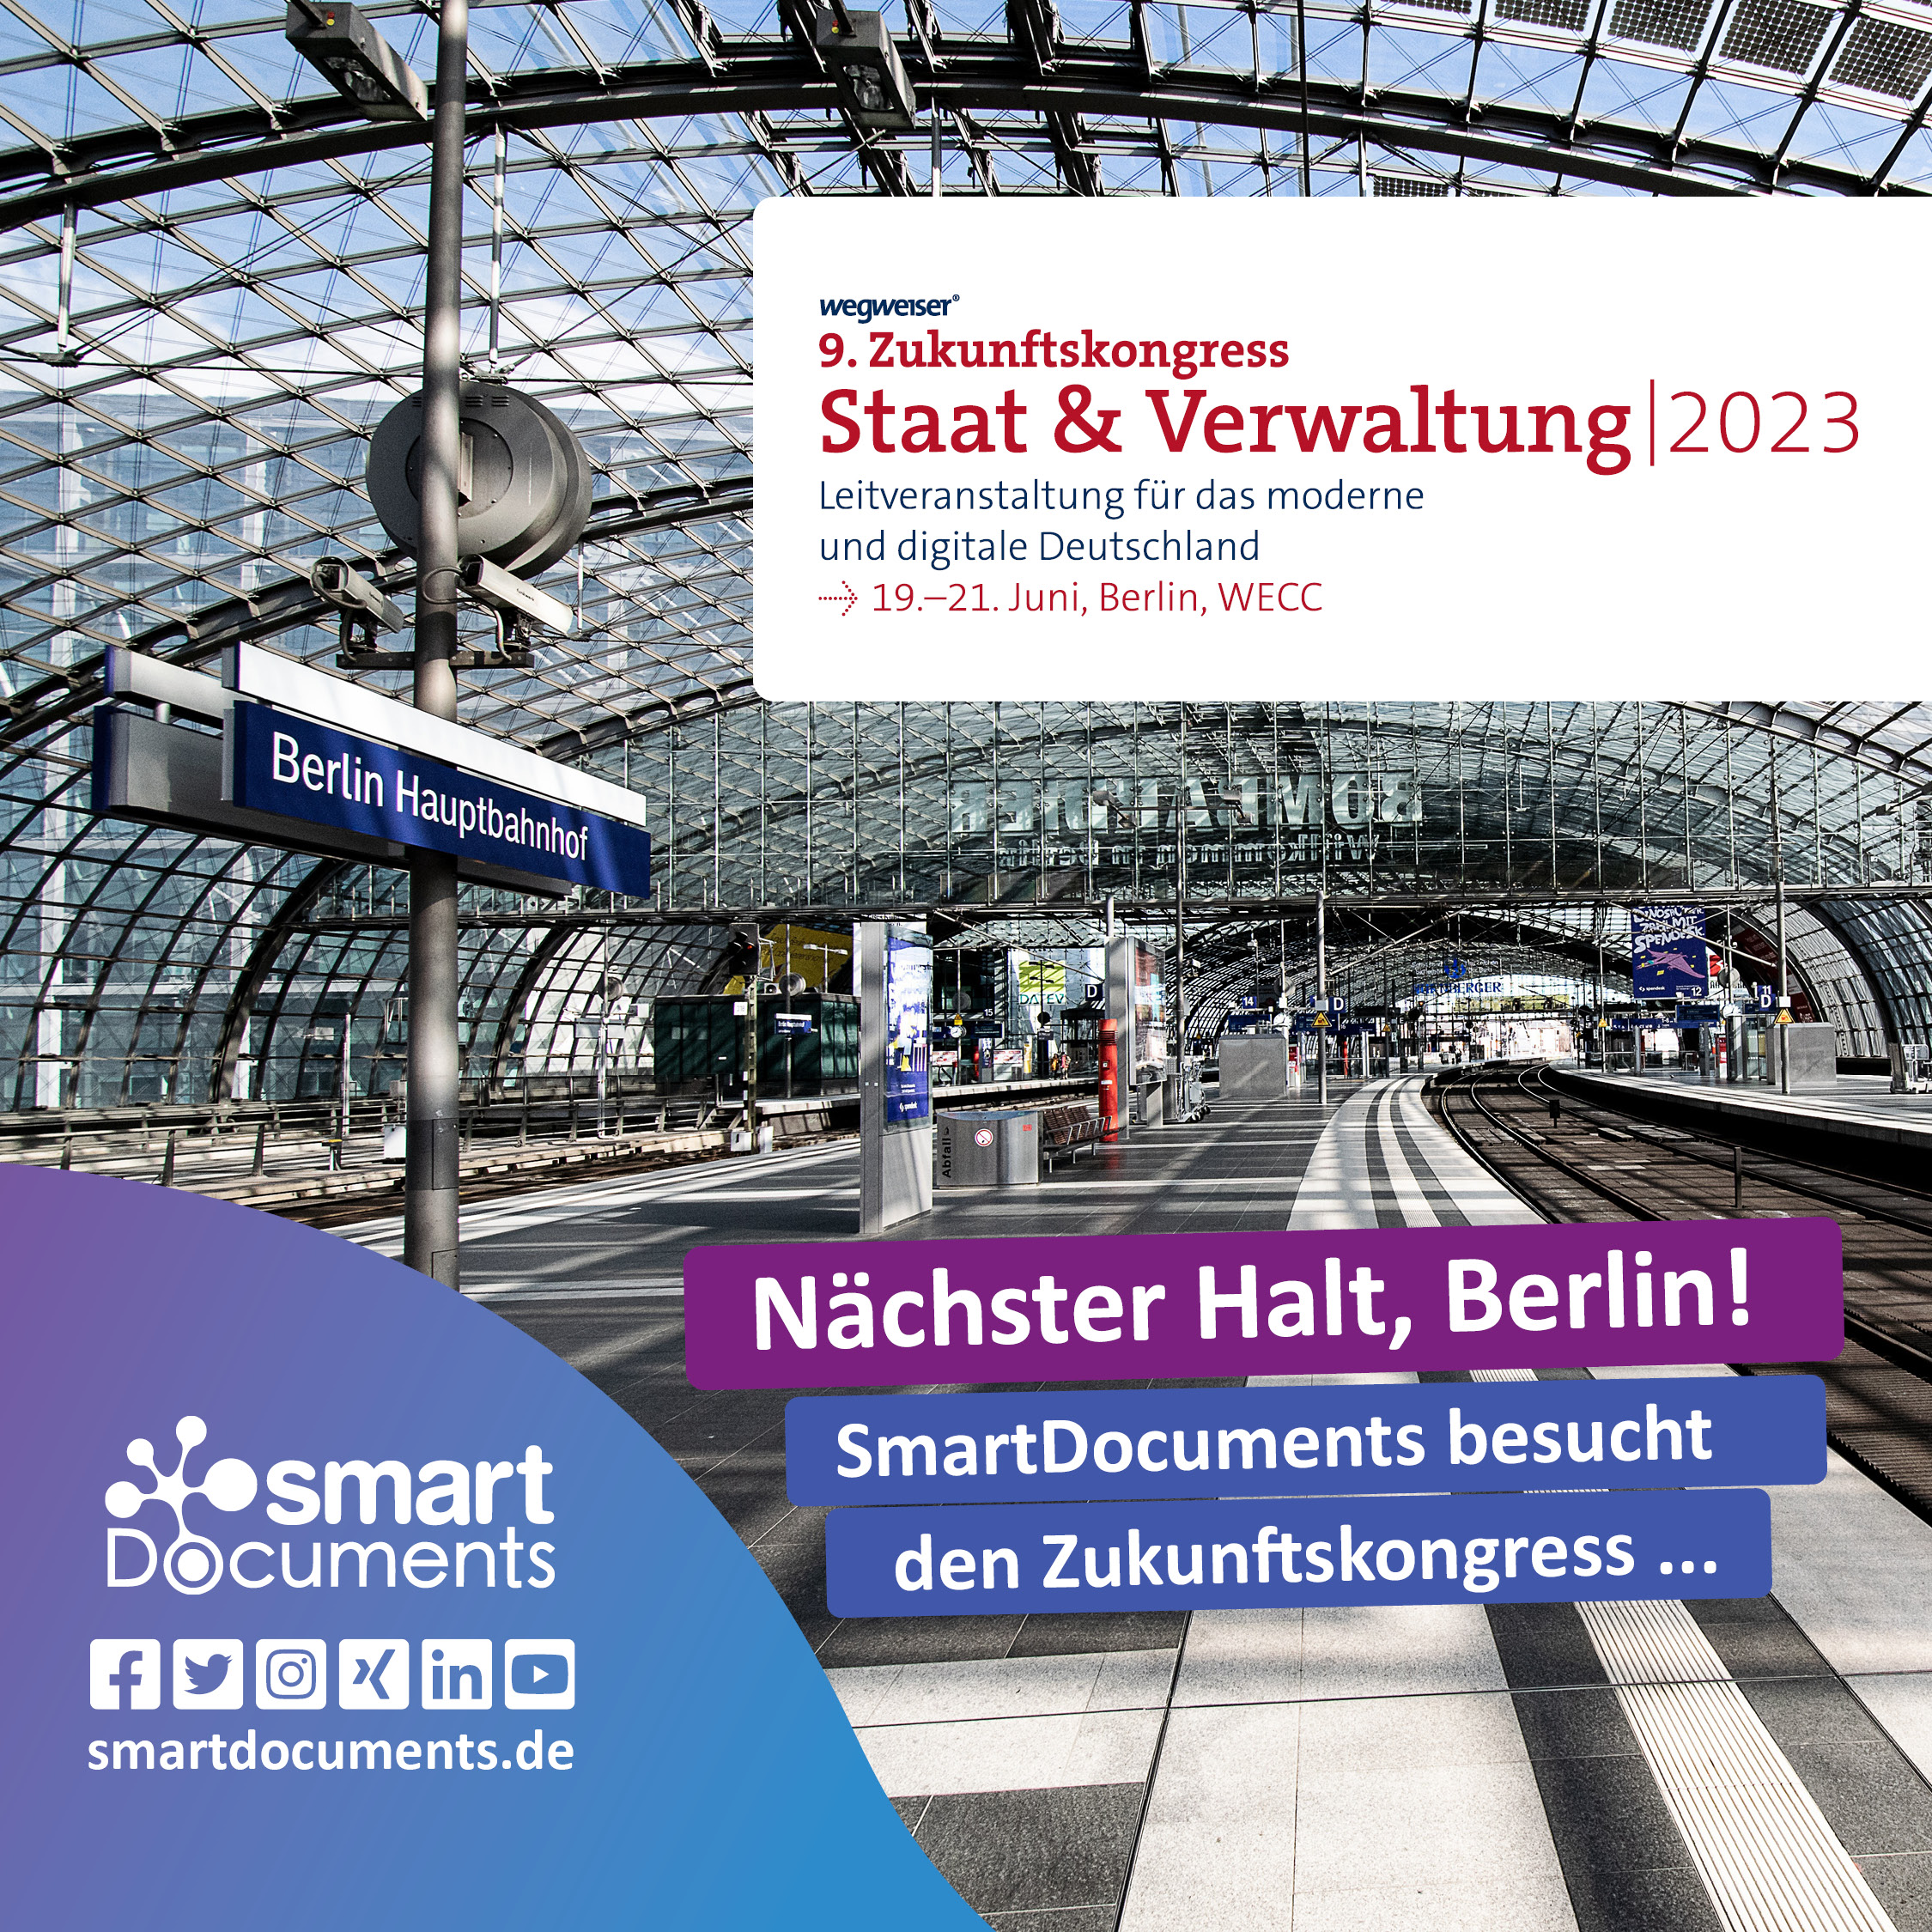 Fotografie Berlin Hauptbahnhof mit Text: Nächster Halt Berlin! Wir besuchen den Zukunftskongress Staat & Verwaltung!